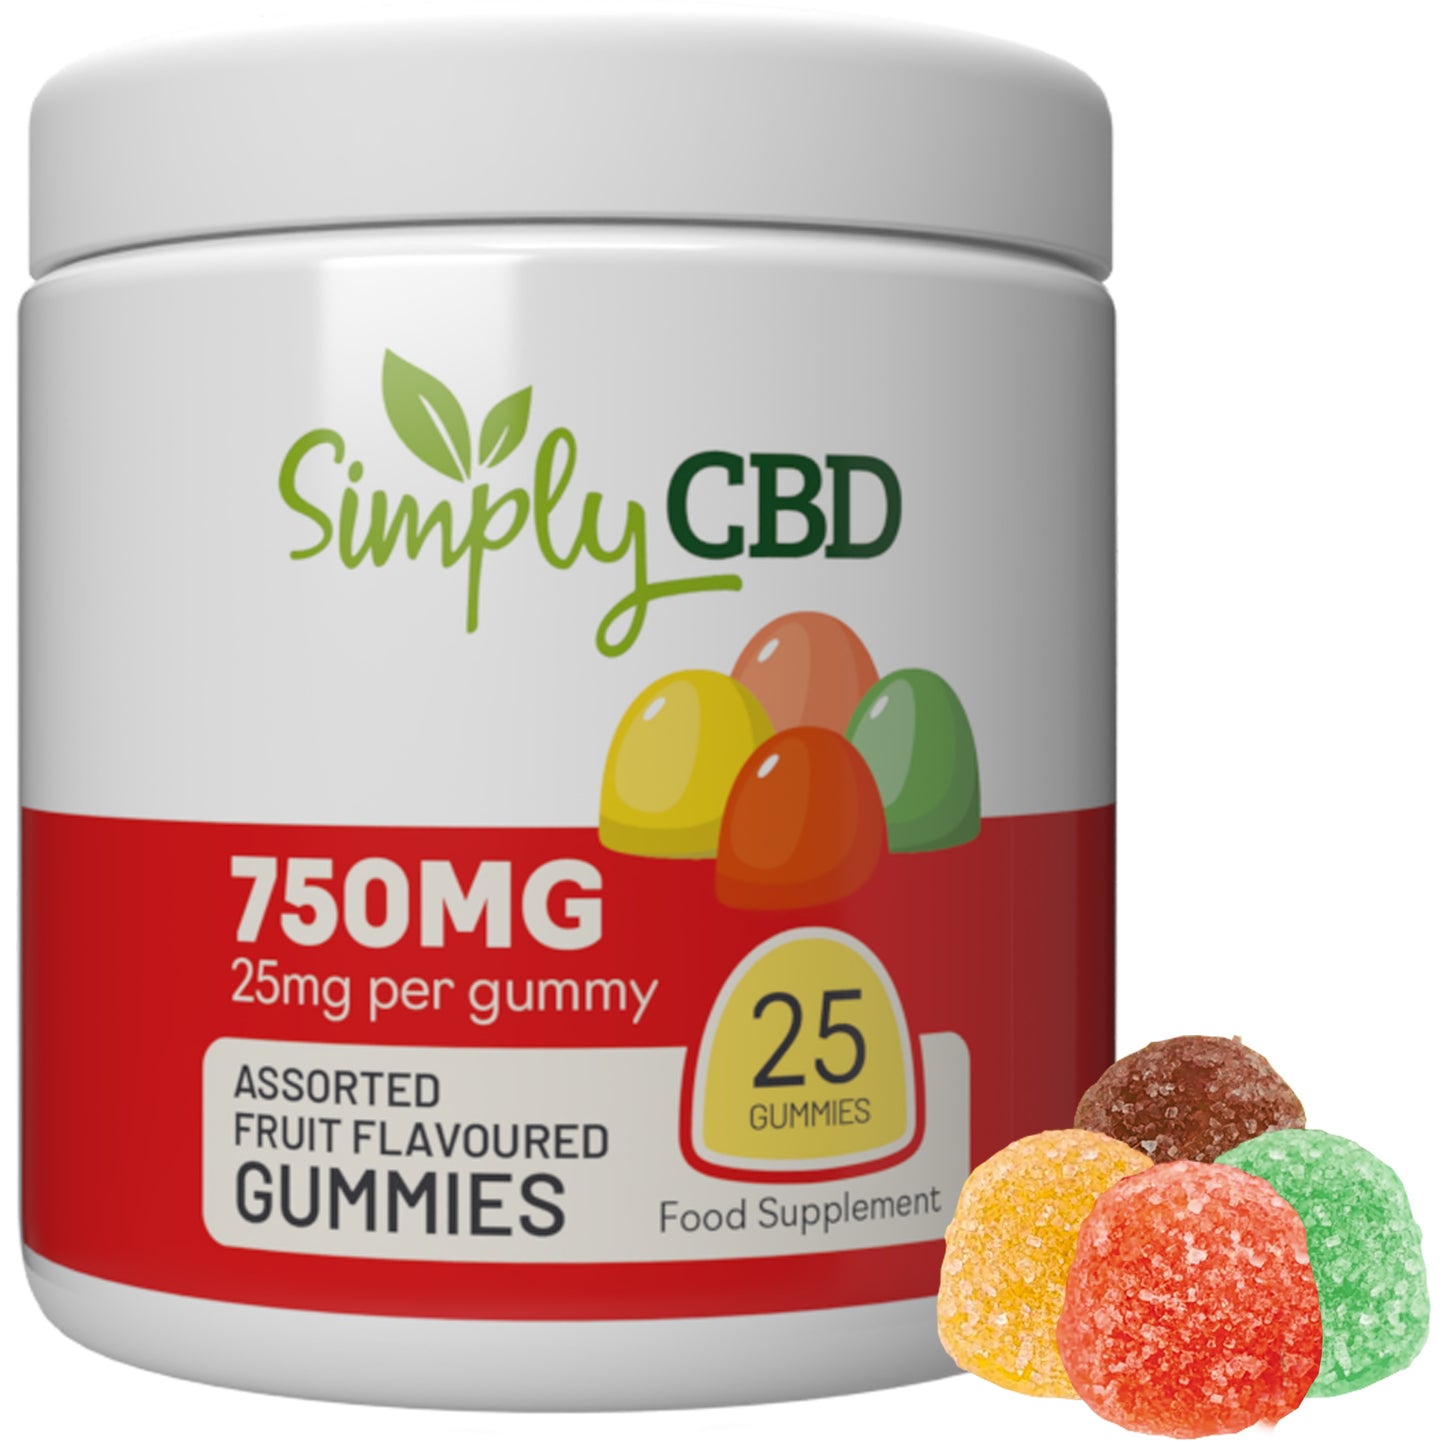 CBD Gummies - 25mg Per Gummy (750mg Total)